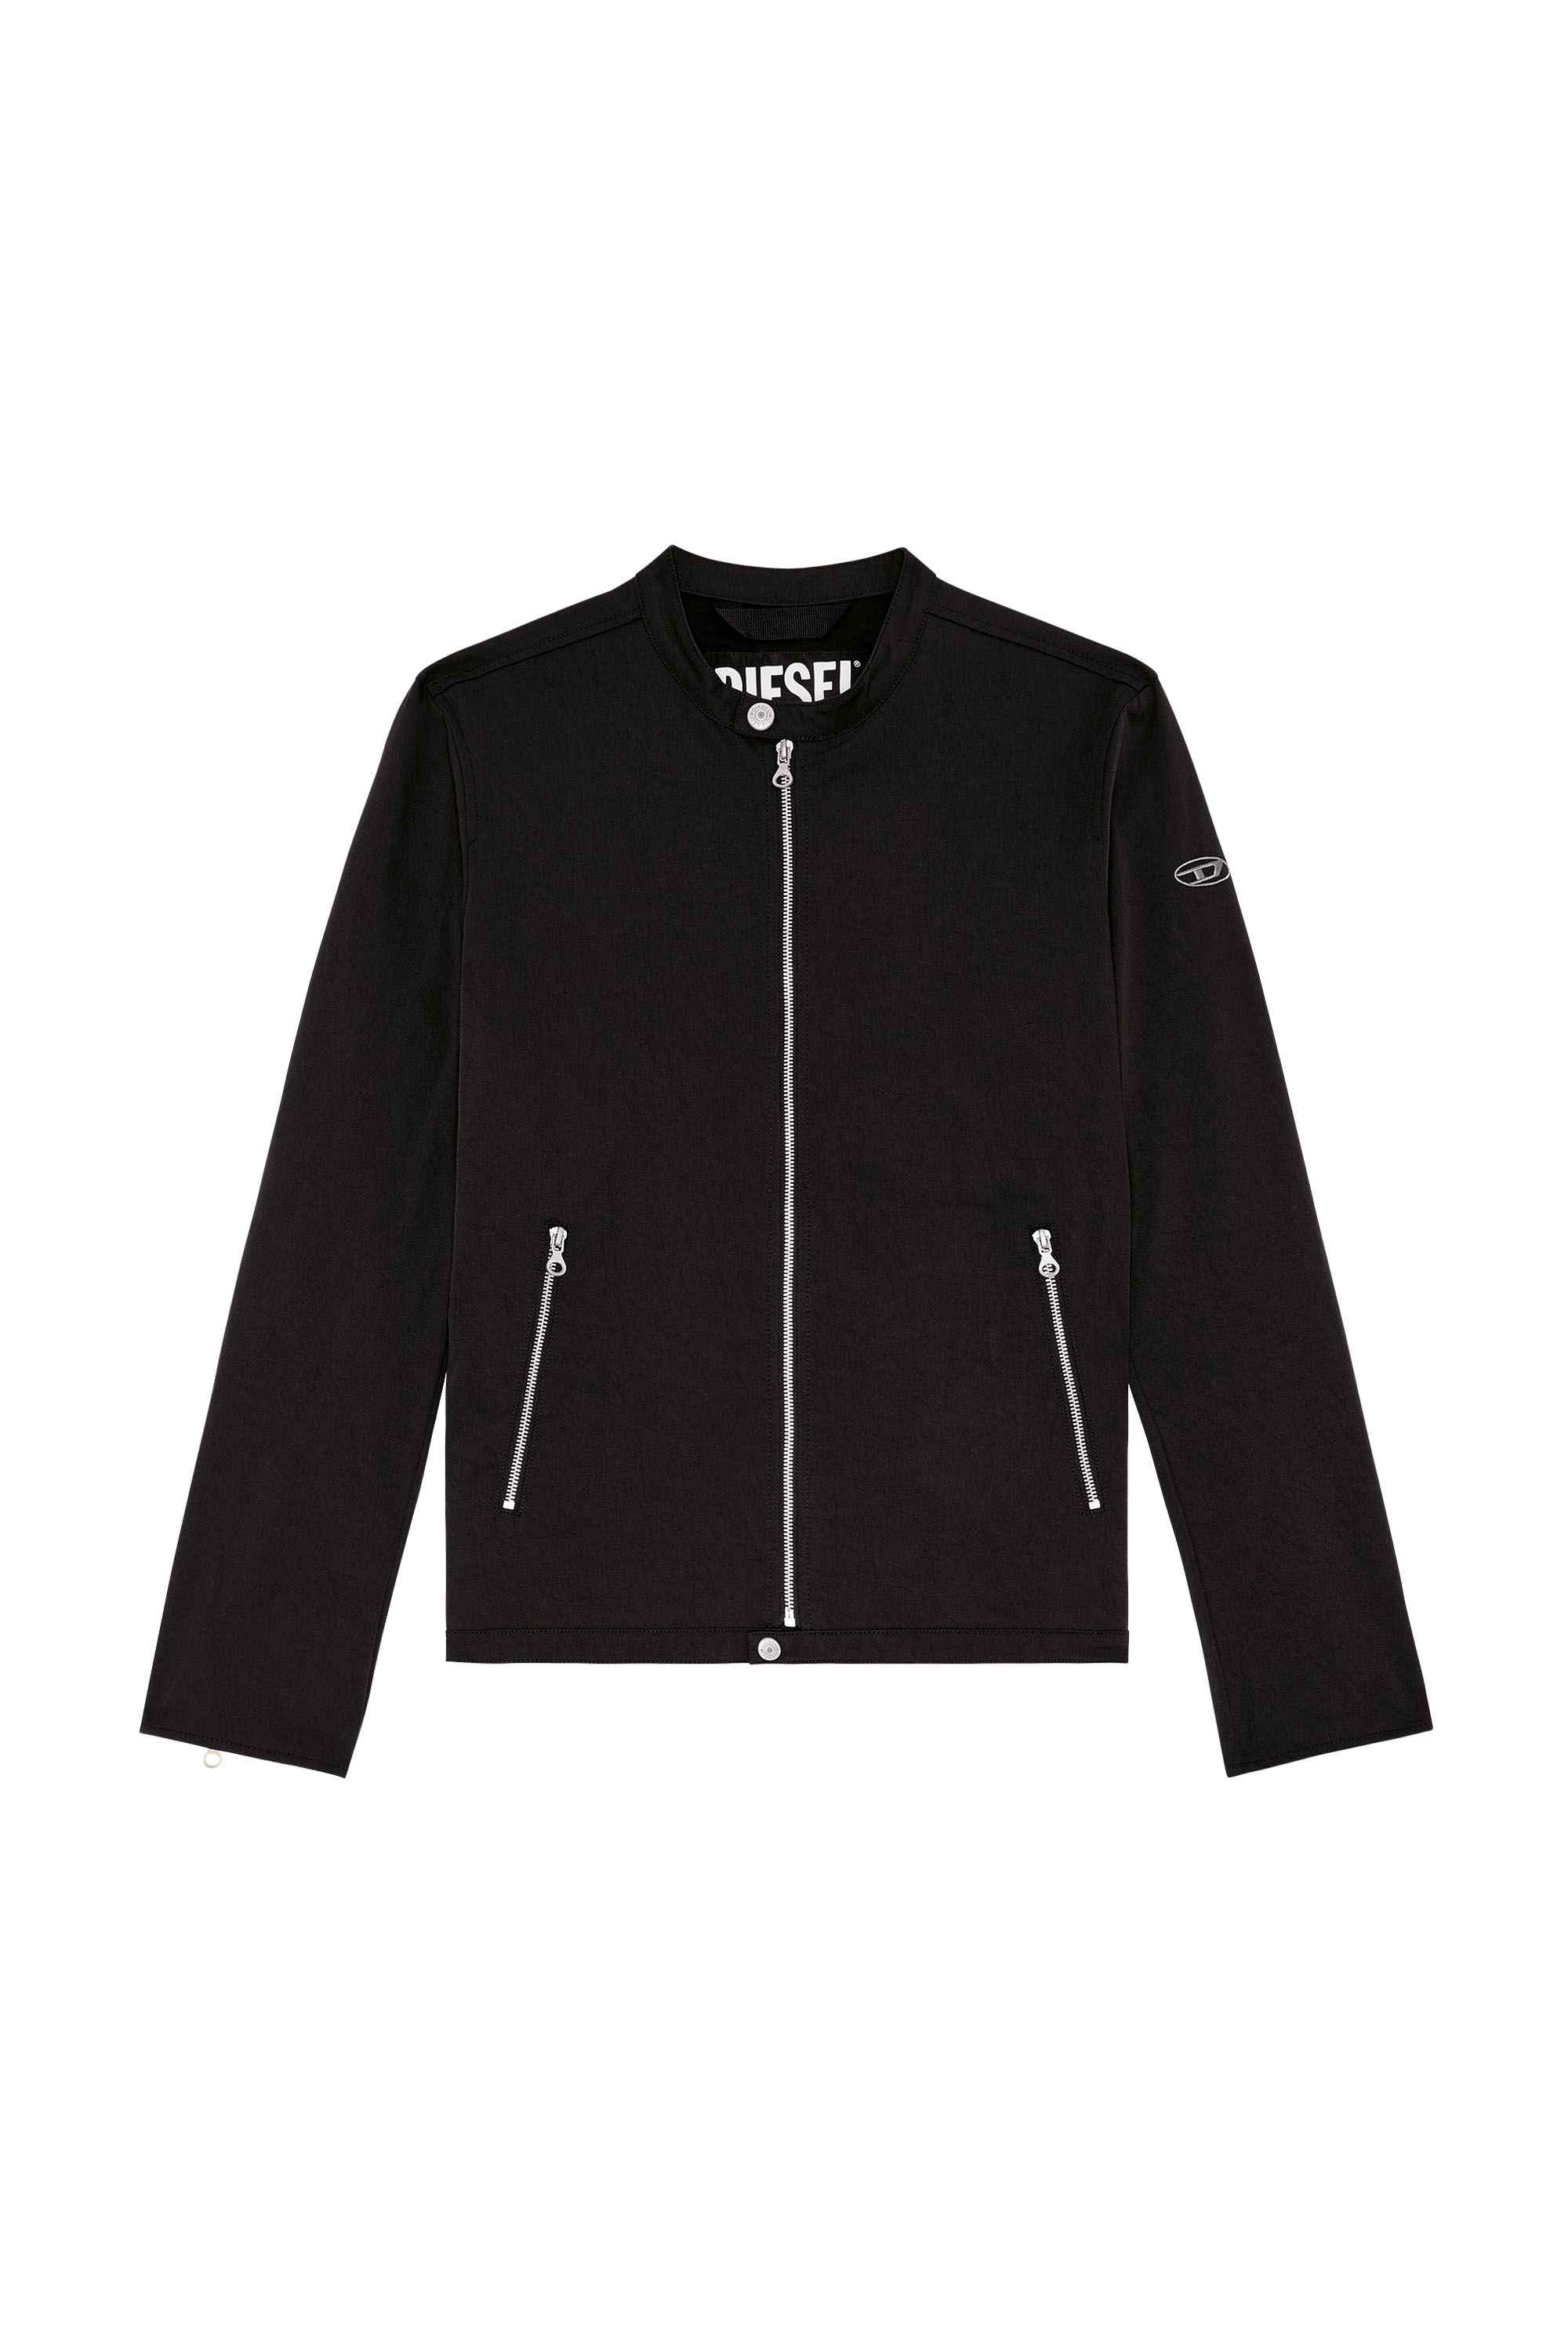 Diesel - J-GLORY-NW, Man Biker jacket in cotton-touch nylon in Black - Image 3